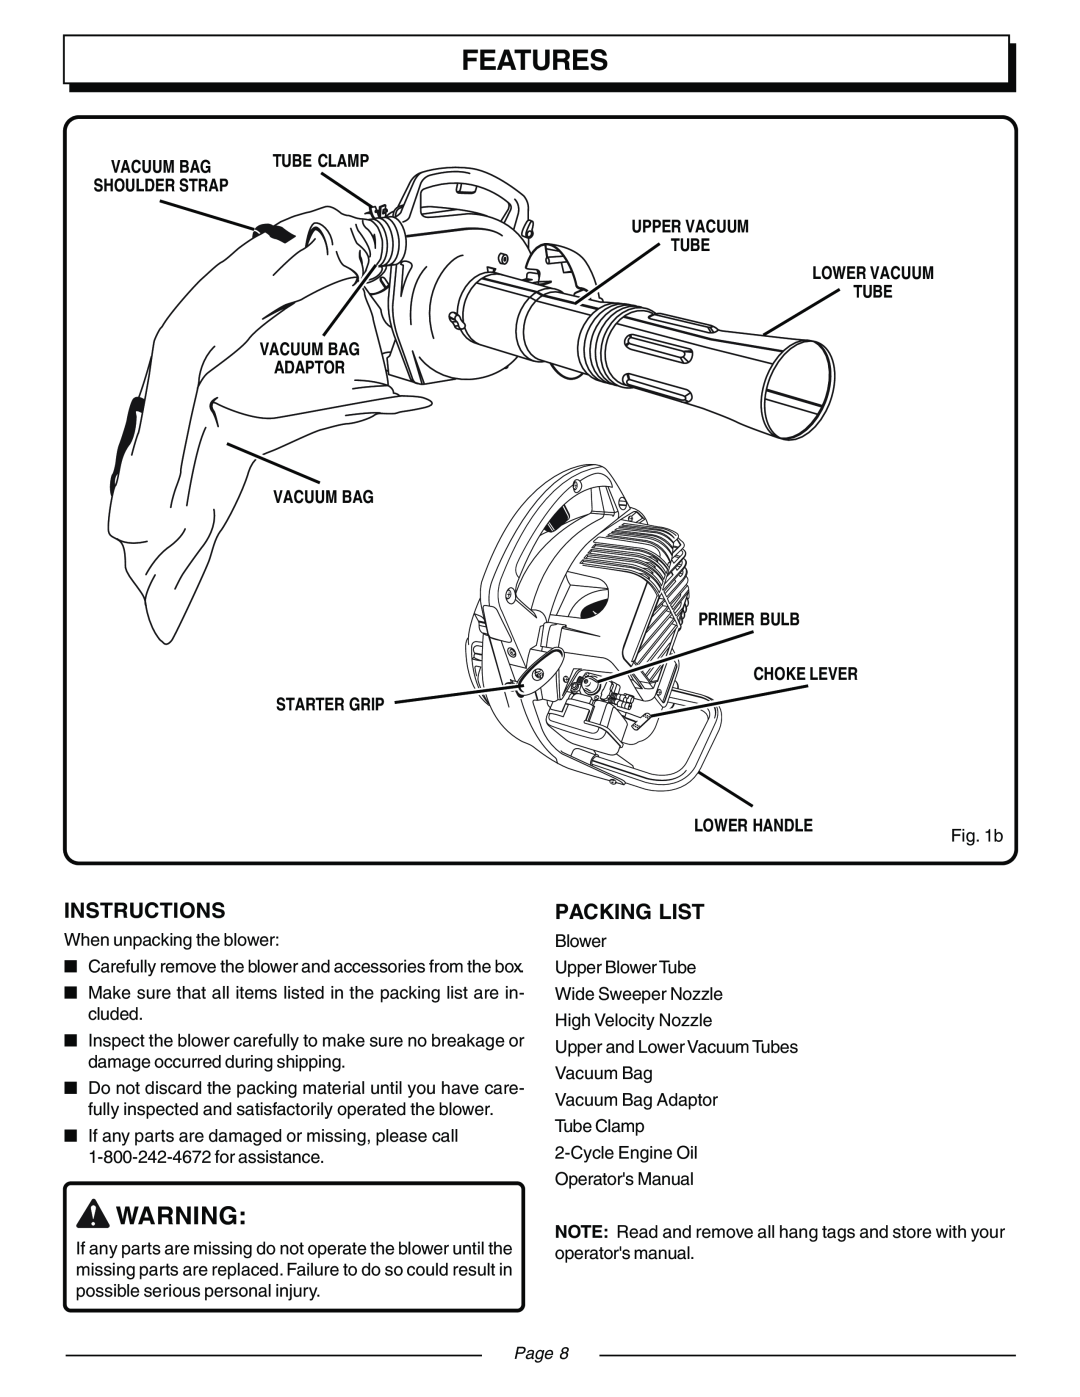 Homelite UT08541, UT08540 manual Features, Vacuum Bag Adaptor Vacuum Bag Starter Grip, Lower Handle, Page 